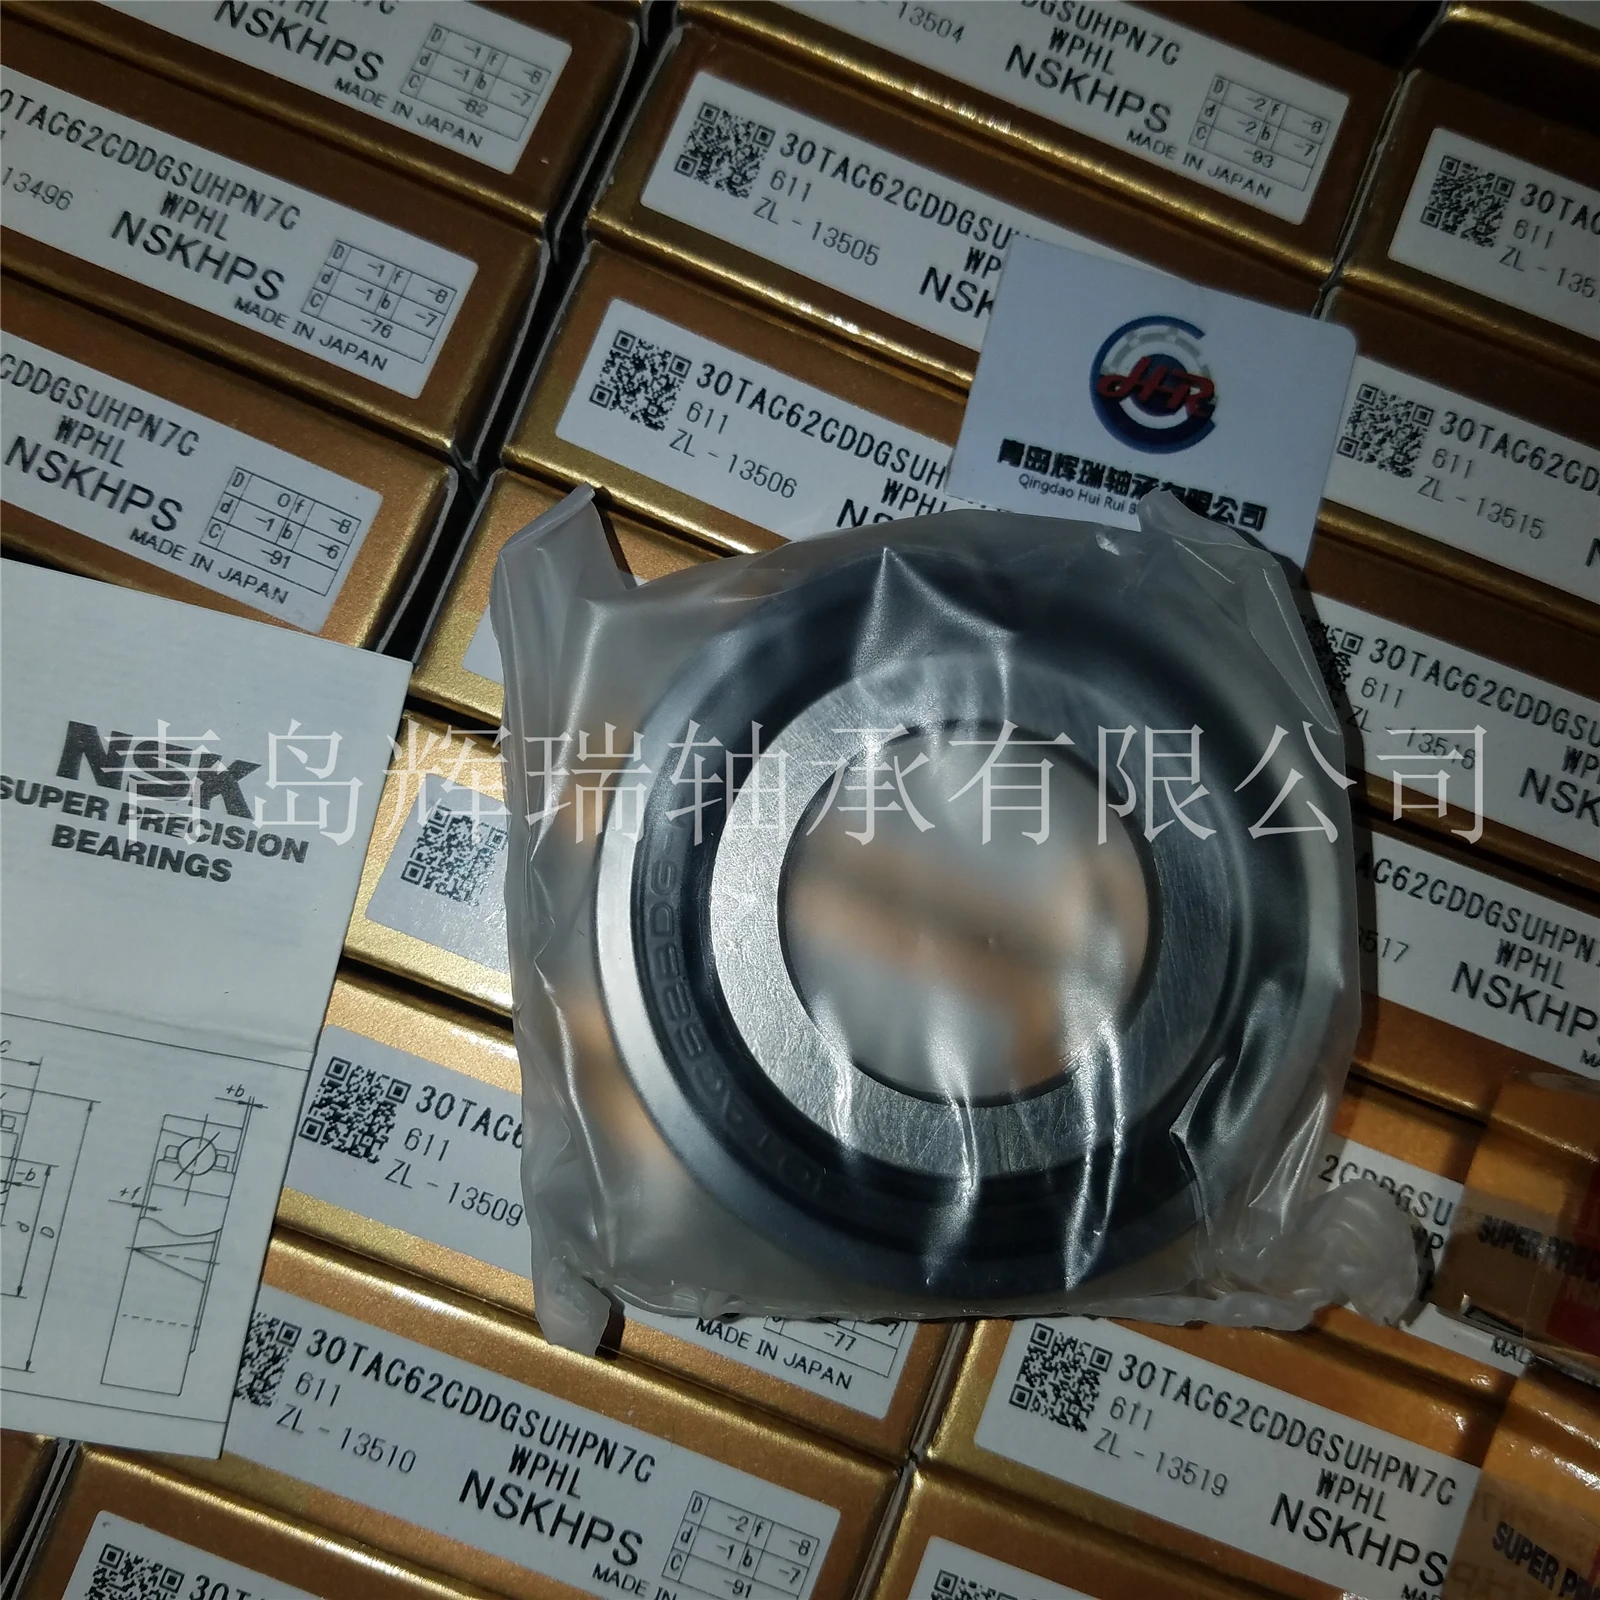 NIB Angular Contact Thrust Ball Screw Support Bearing for NSK 30TAC62CDDGSUHPN7C 